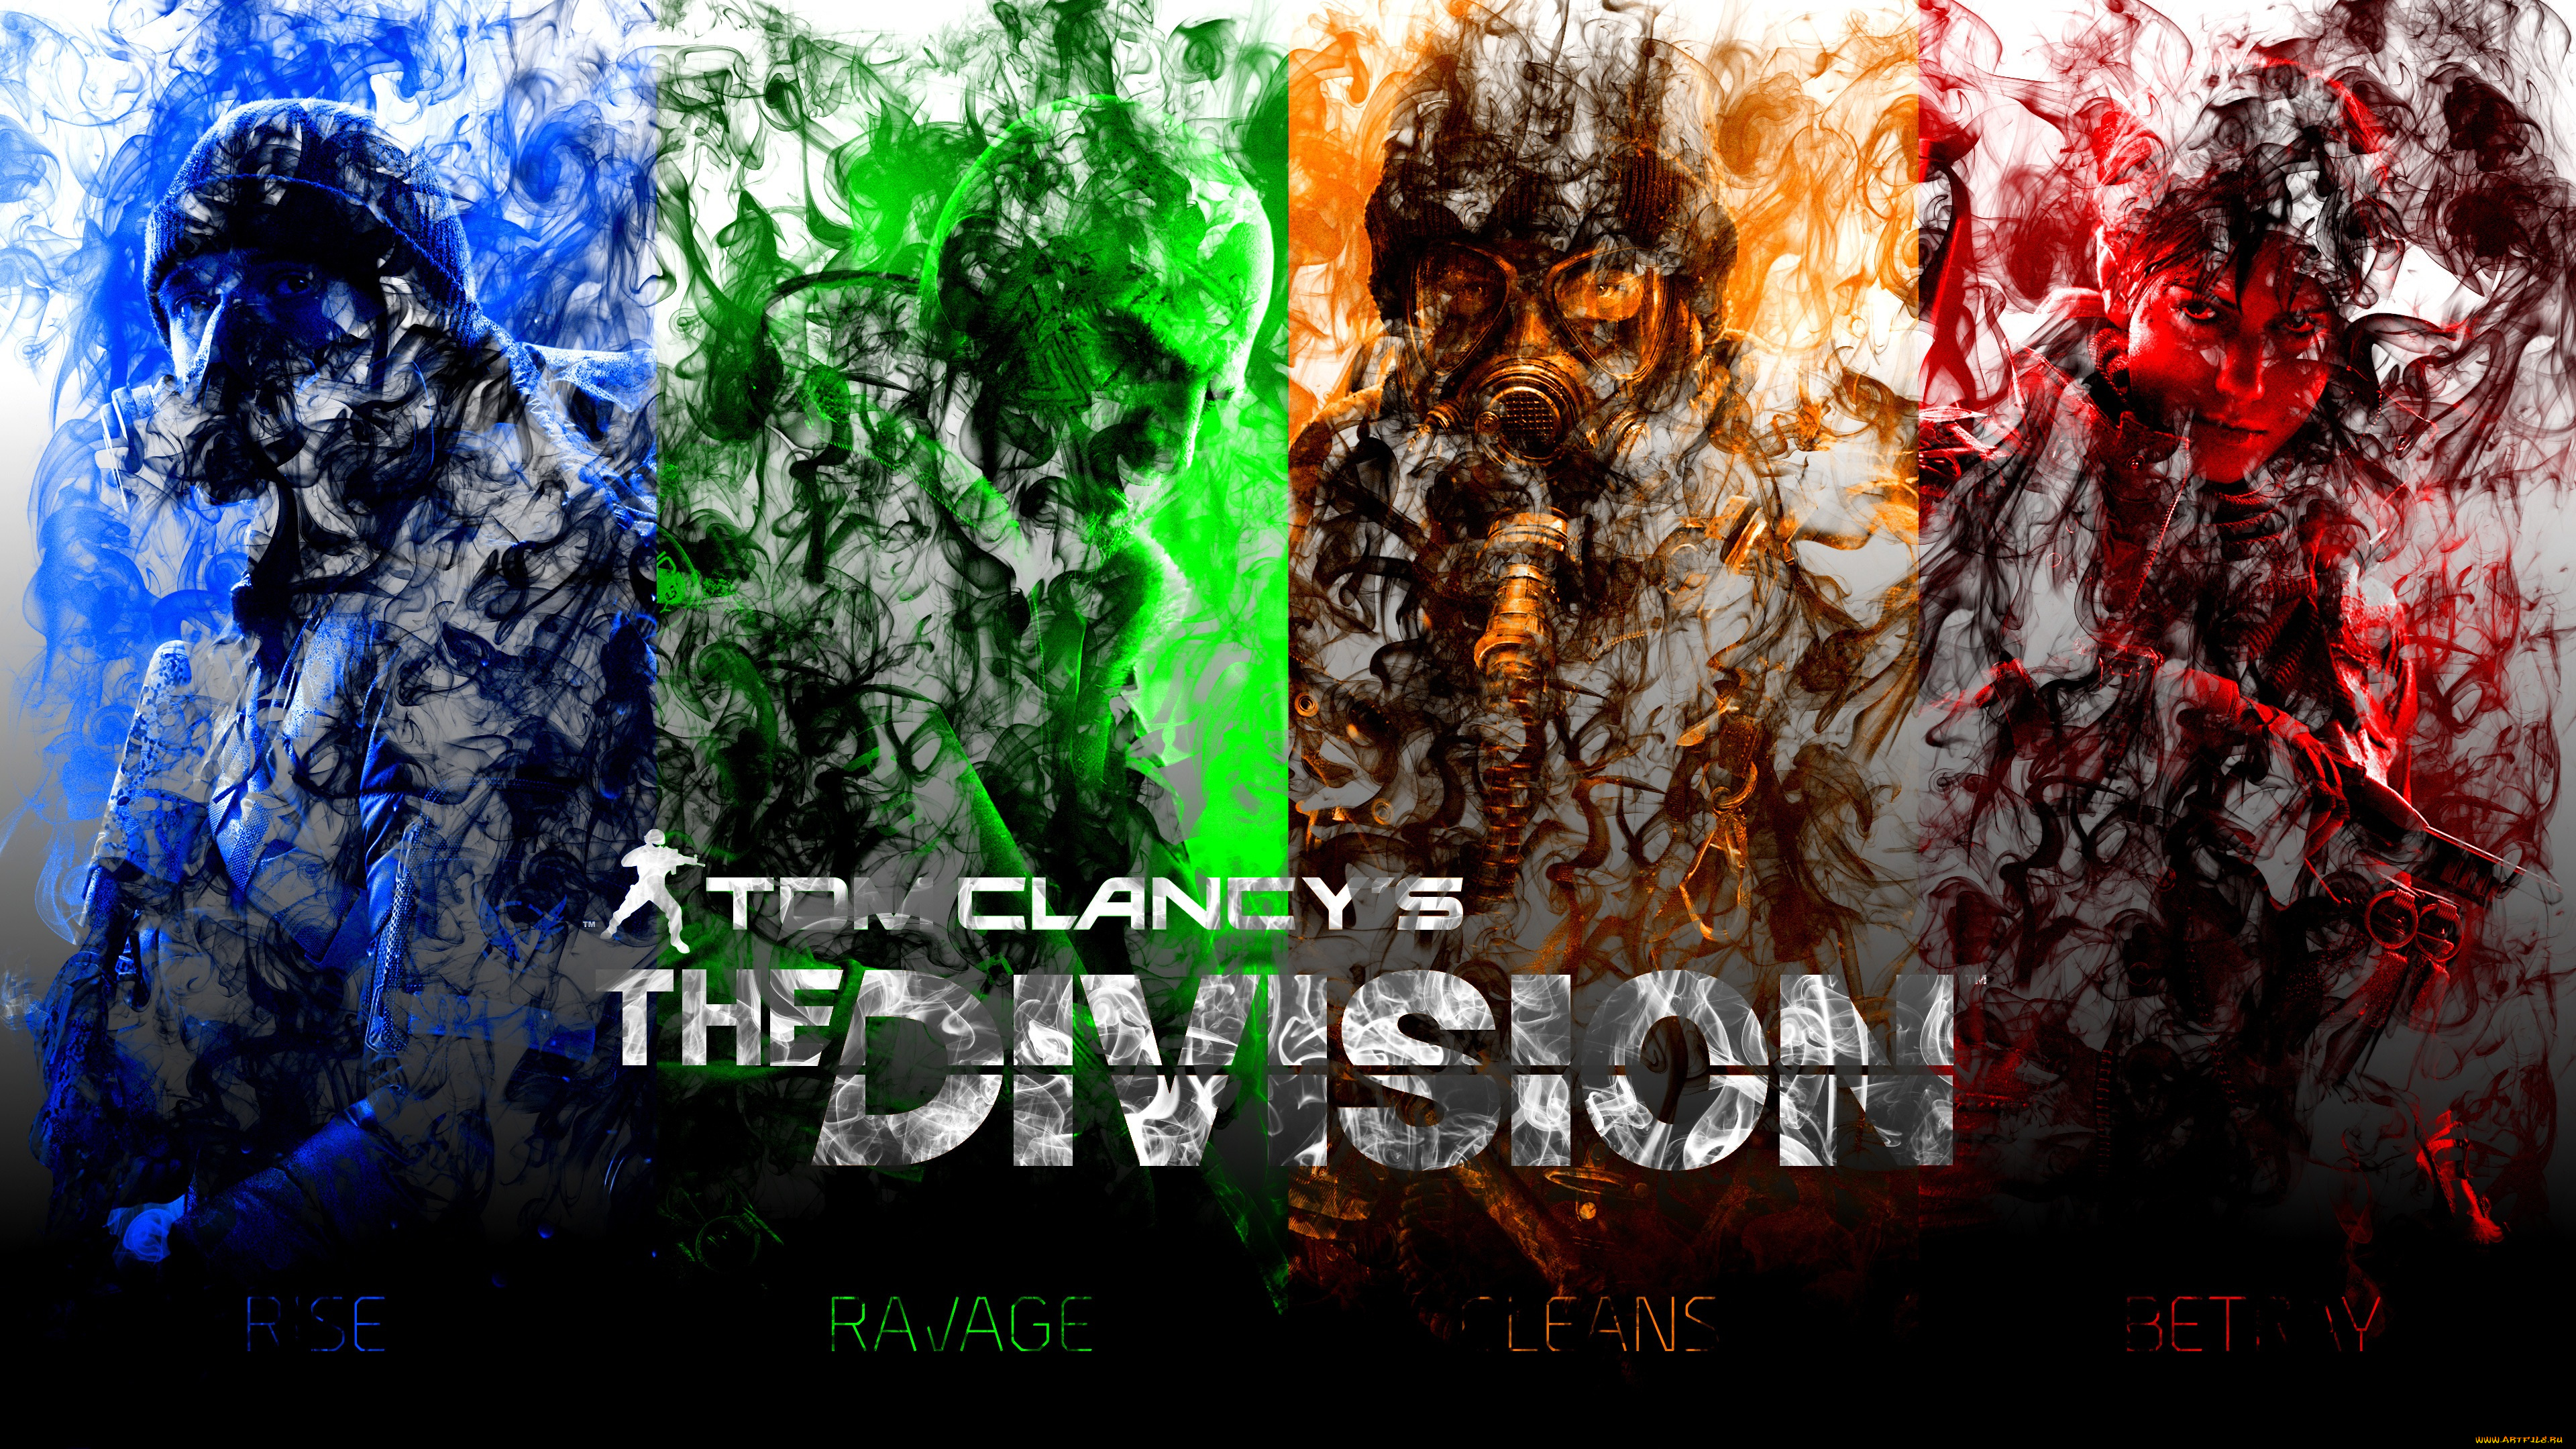 Game posters. Постеры видеоигр. Постеры к играм арт. Tom Clancy's the Division posters betray. 2048 X 1152 игры коллаж.